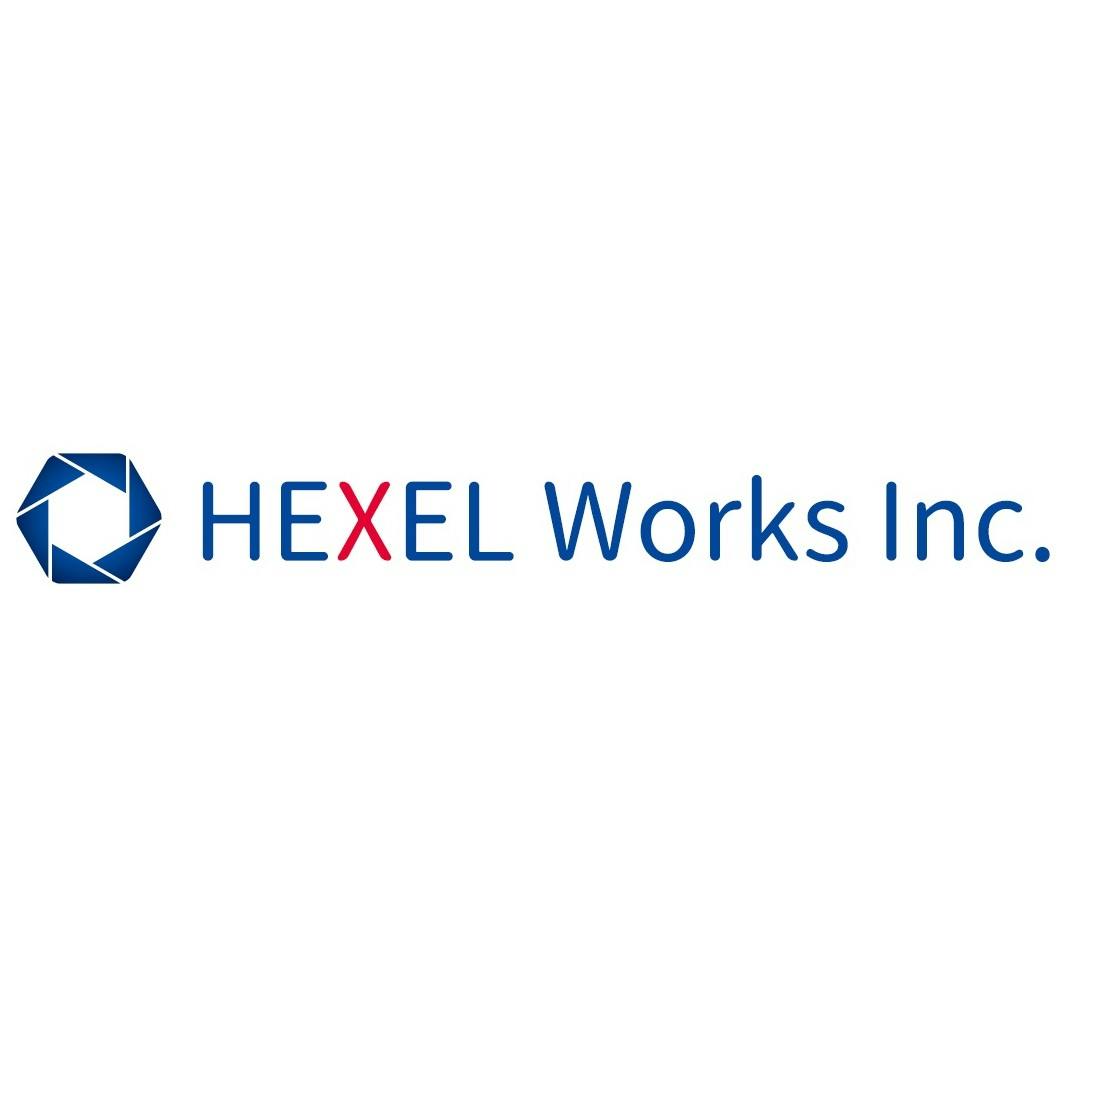 HEXEL Works